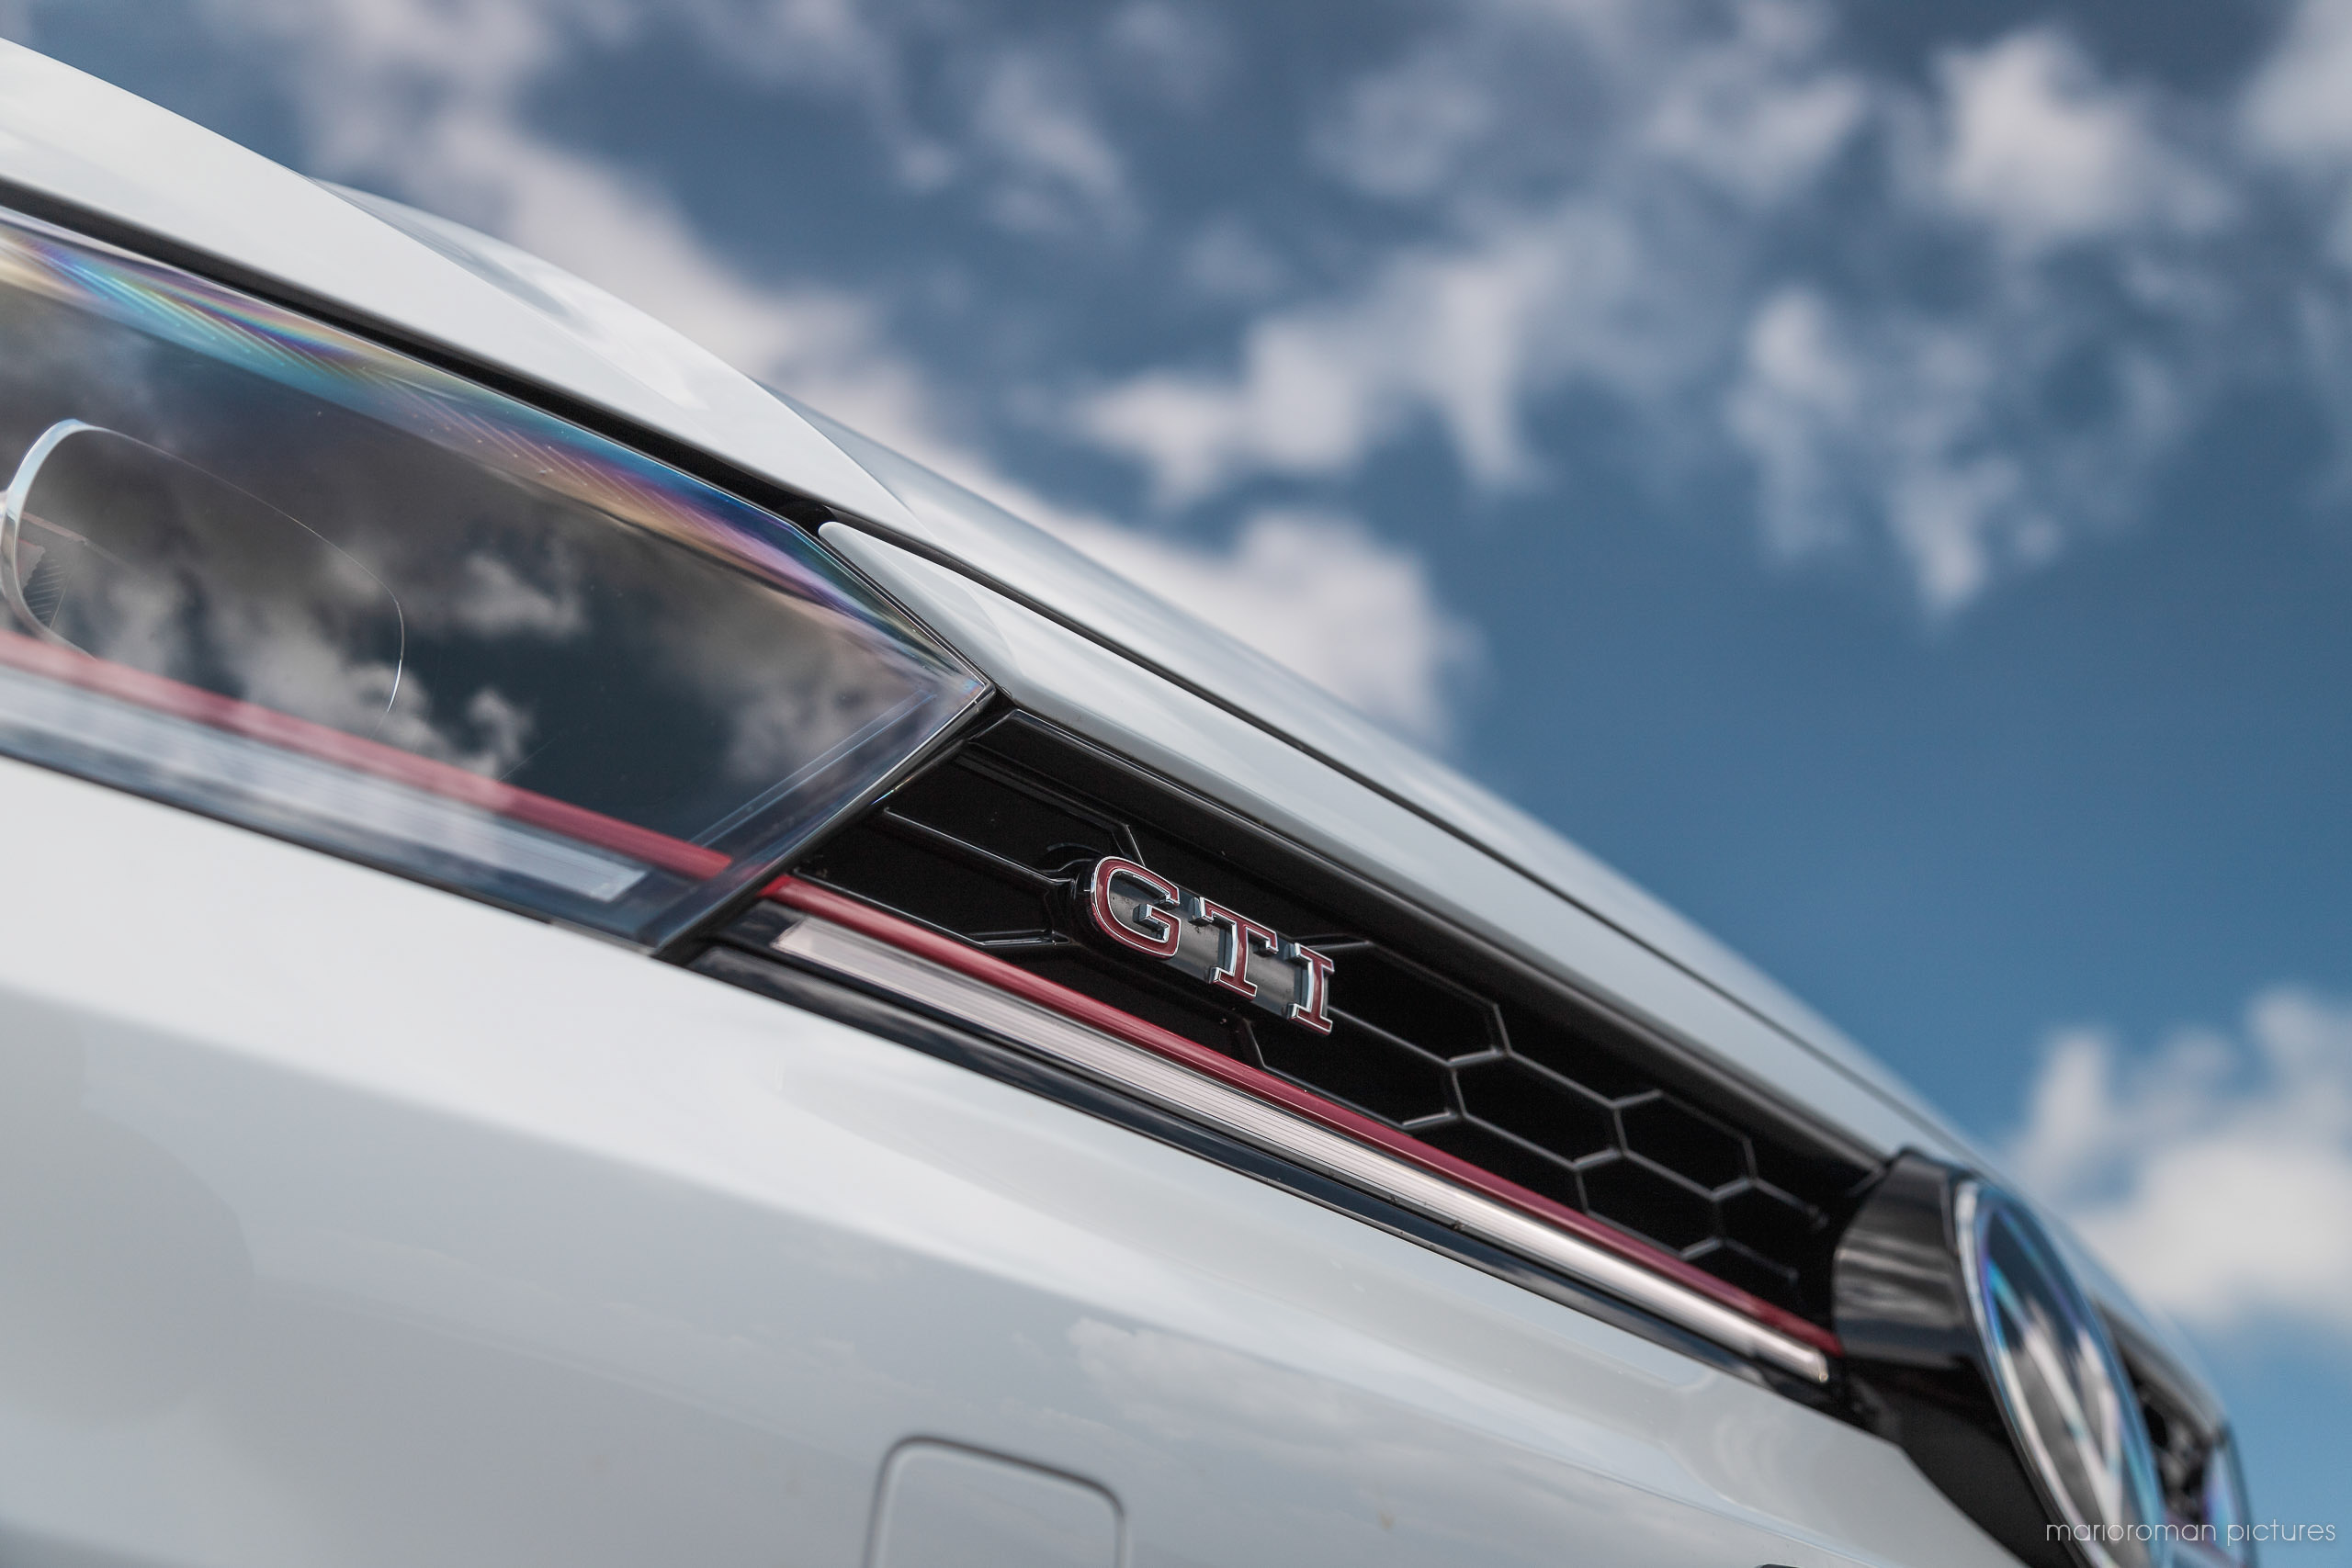 2022 Volkswagen Poio GTI | MarioRoman Pictures